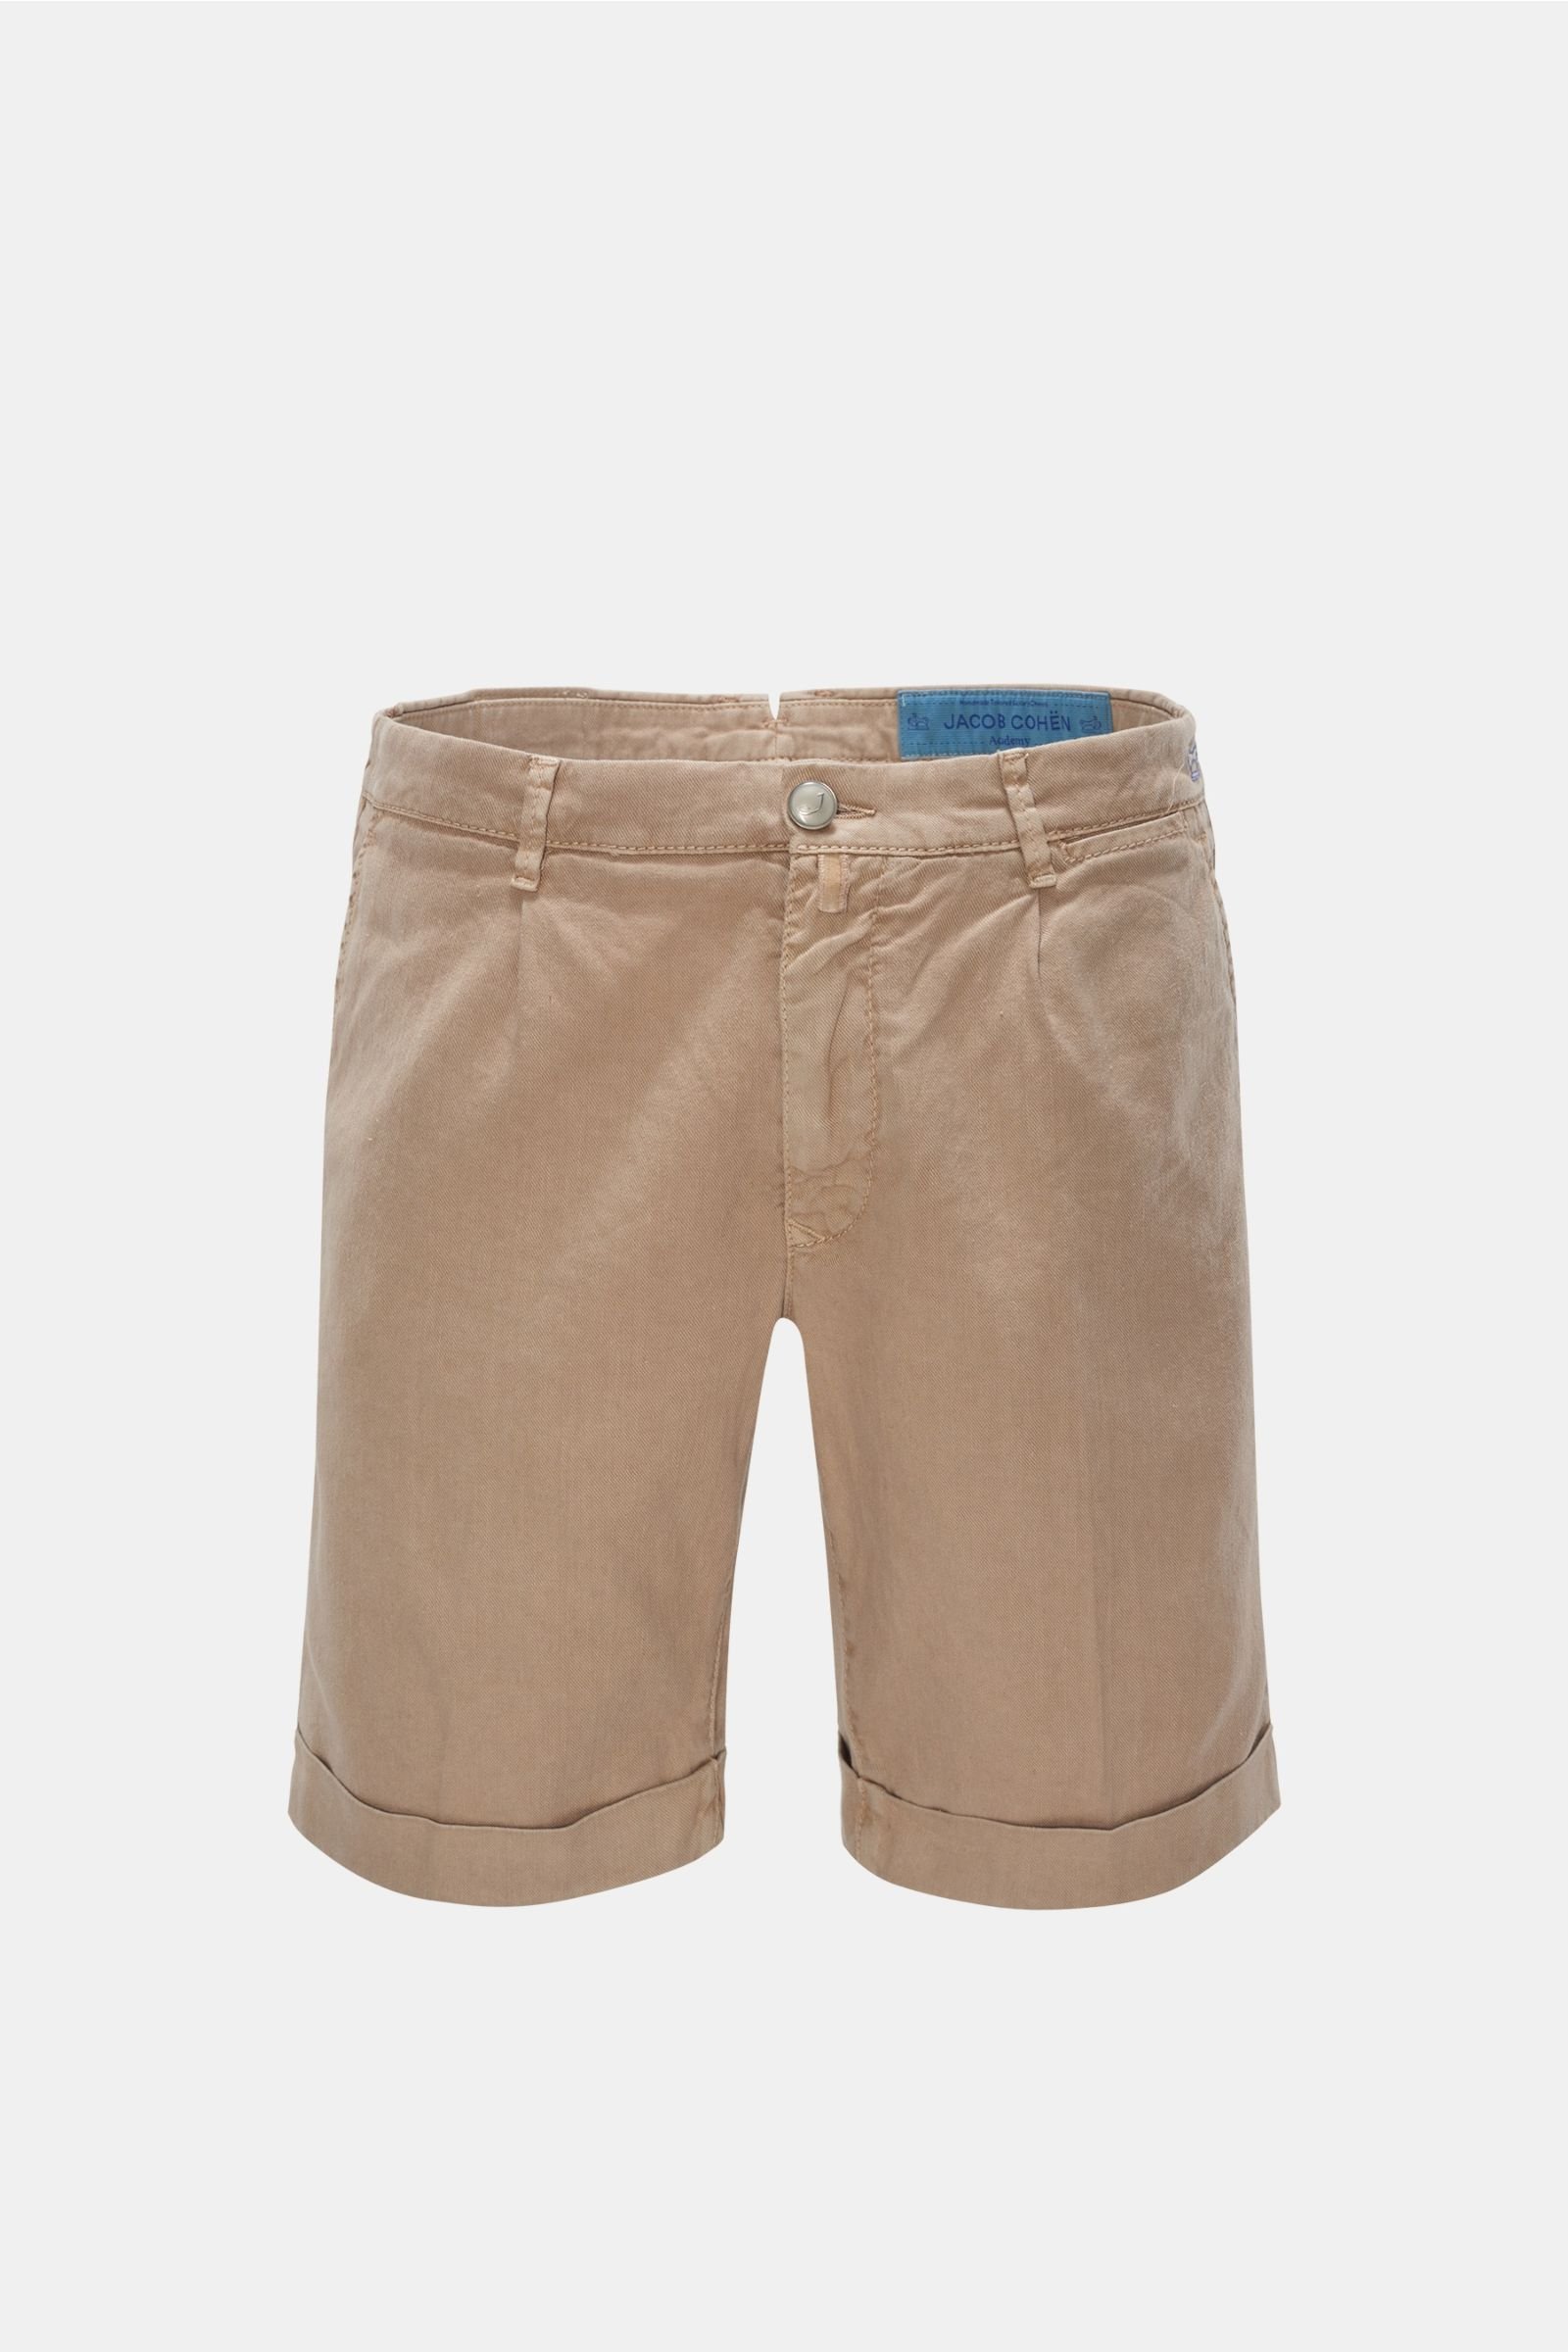 Bermuda shorts 'Tropez Comfort Slim Fit' light brown